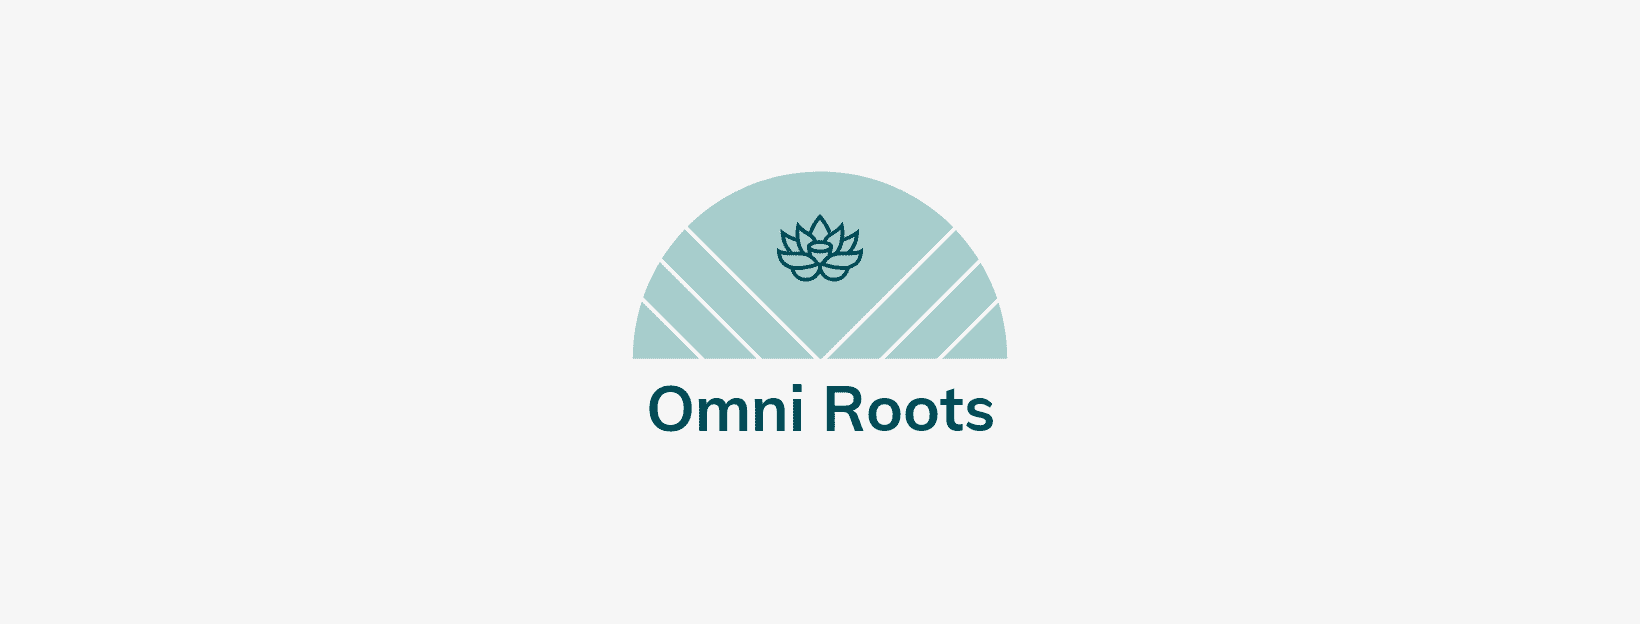 Omni Roots